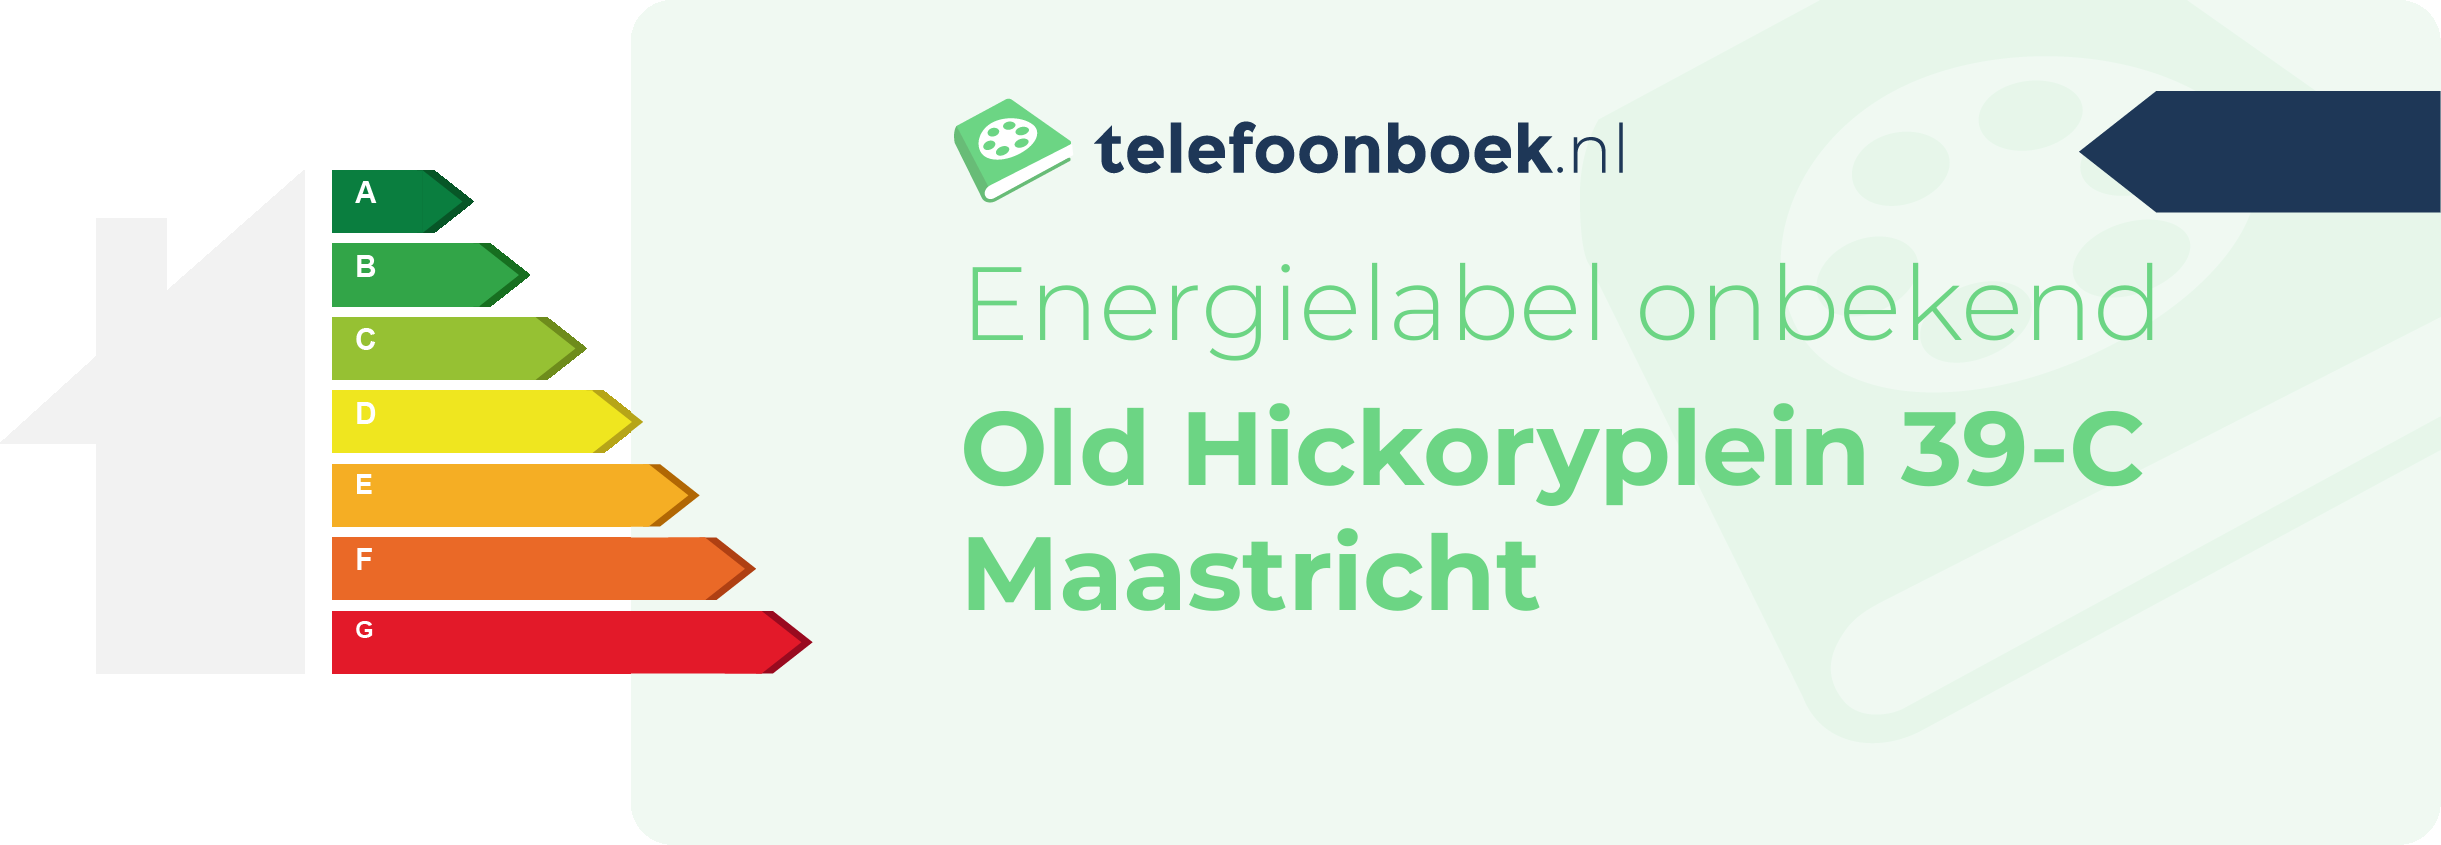 Energielabel Old Hickoryplein 39-C Maastricht